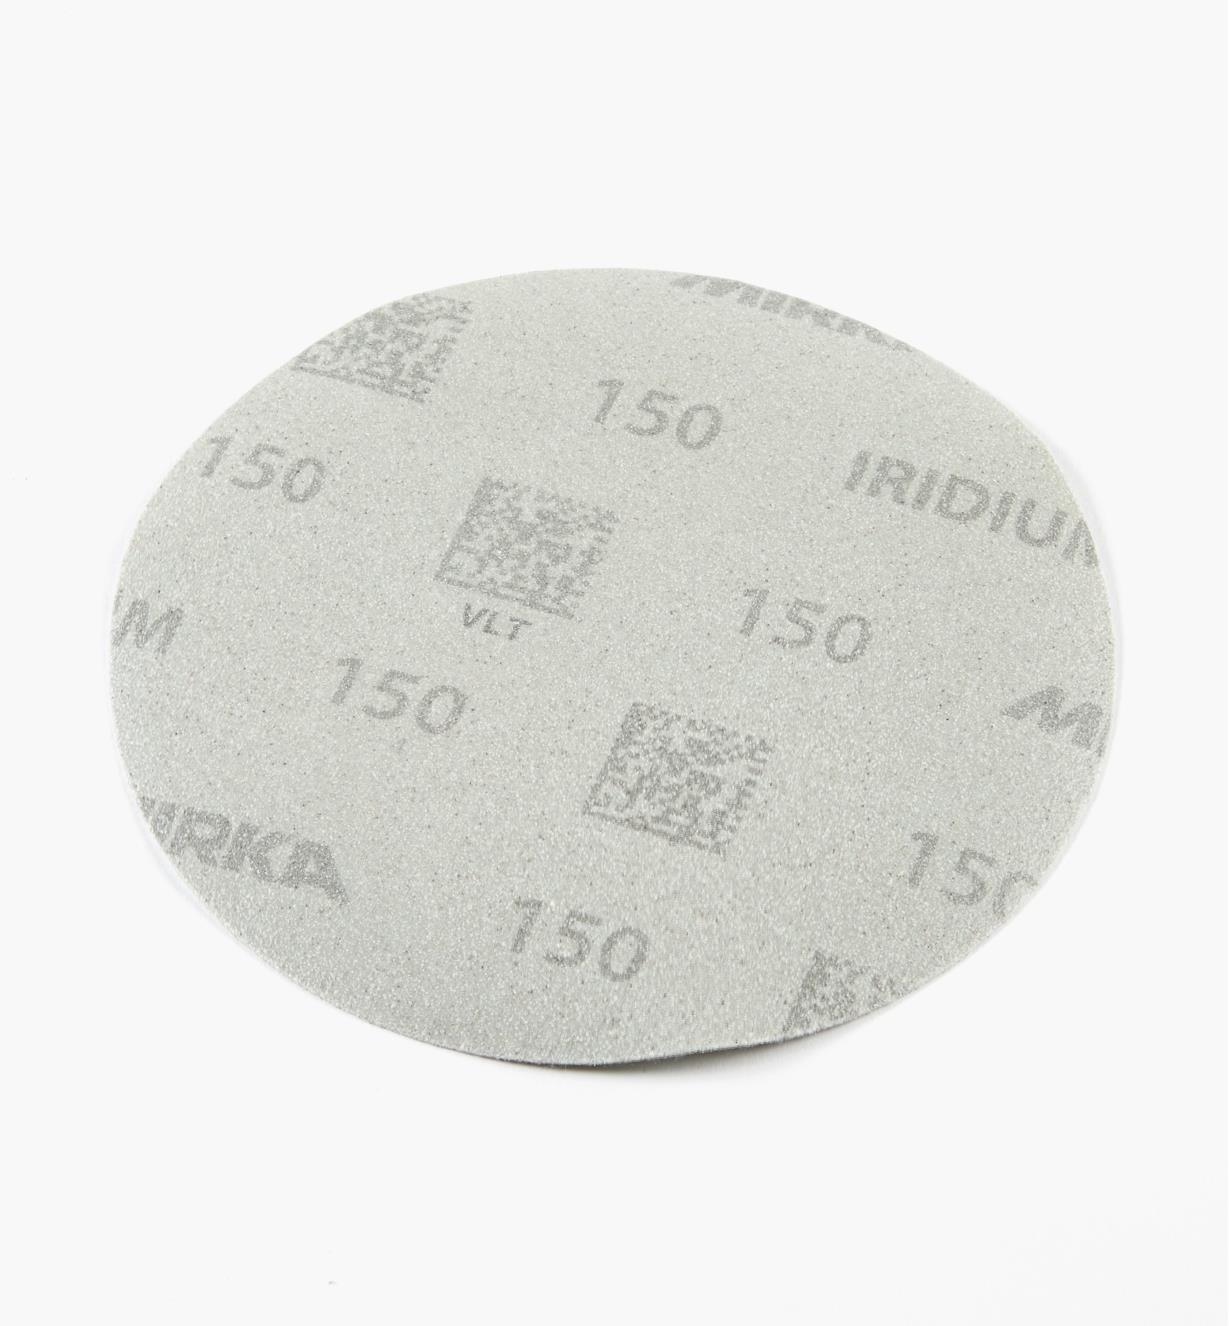 08K1743 - 150x 6" No-Hole Iridium Grip Disc, ea.